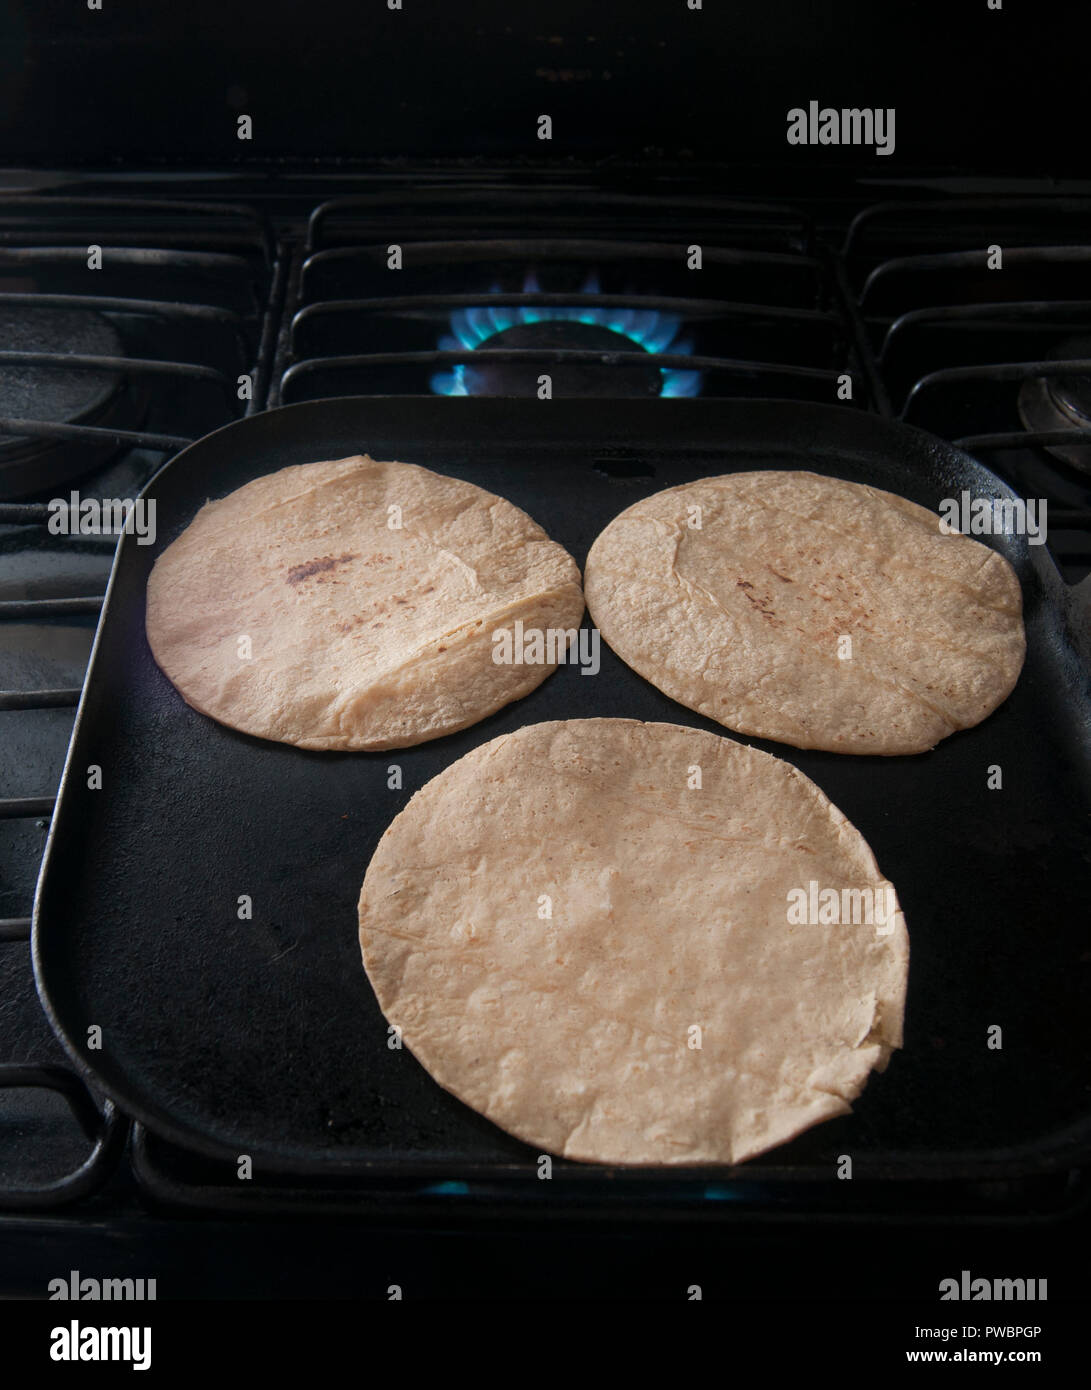 https://c8.alamy.com/compes/pwbpgp/calentar-las-tortillas-de-maiz-en-la-parte-superior-de-comal-pwbpgp.jpg